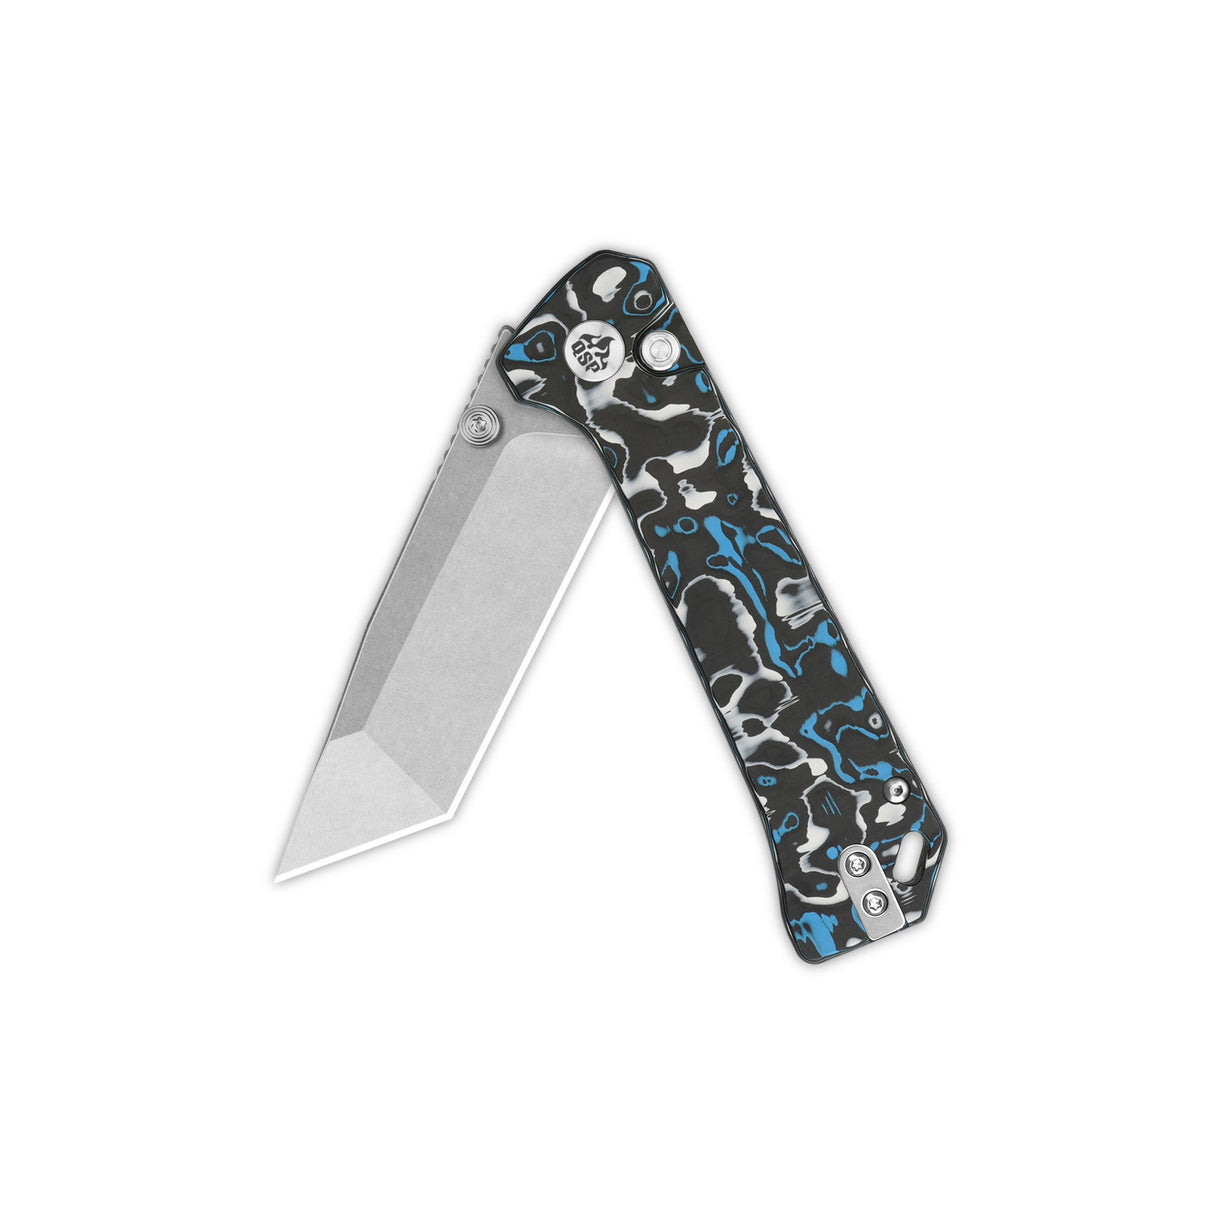 QSP Grebe T Button Lock Pocket Knife S35VN blade Blue camo CF Handle